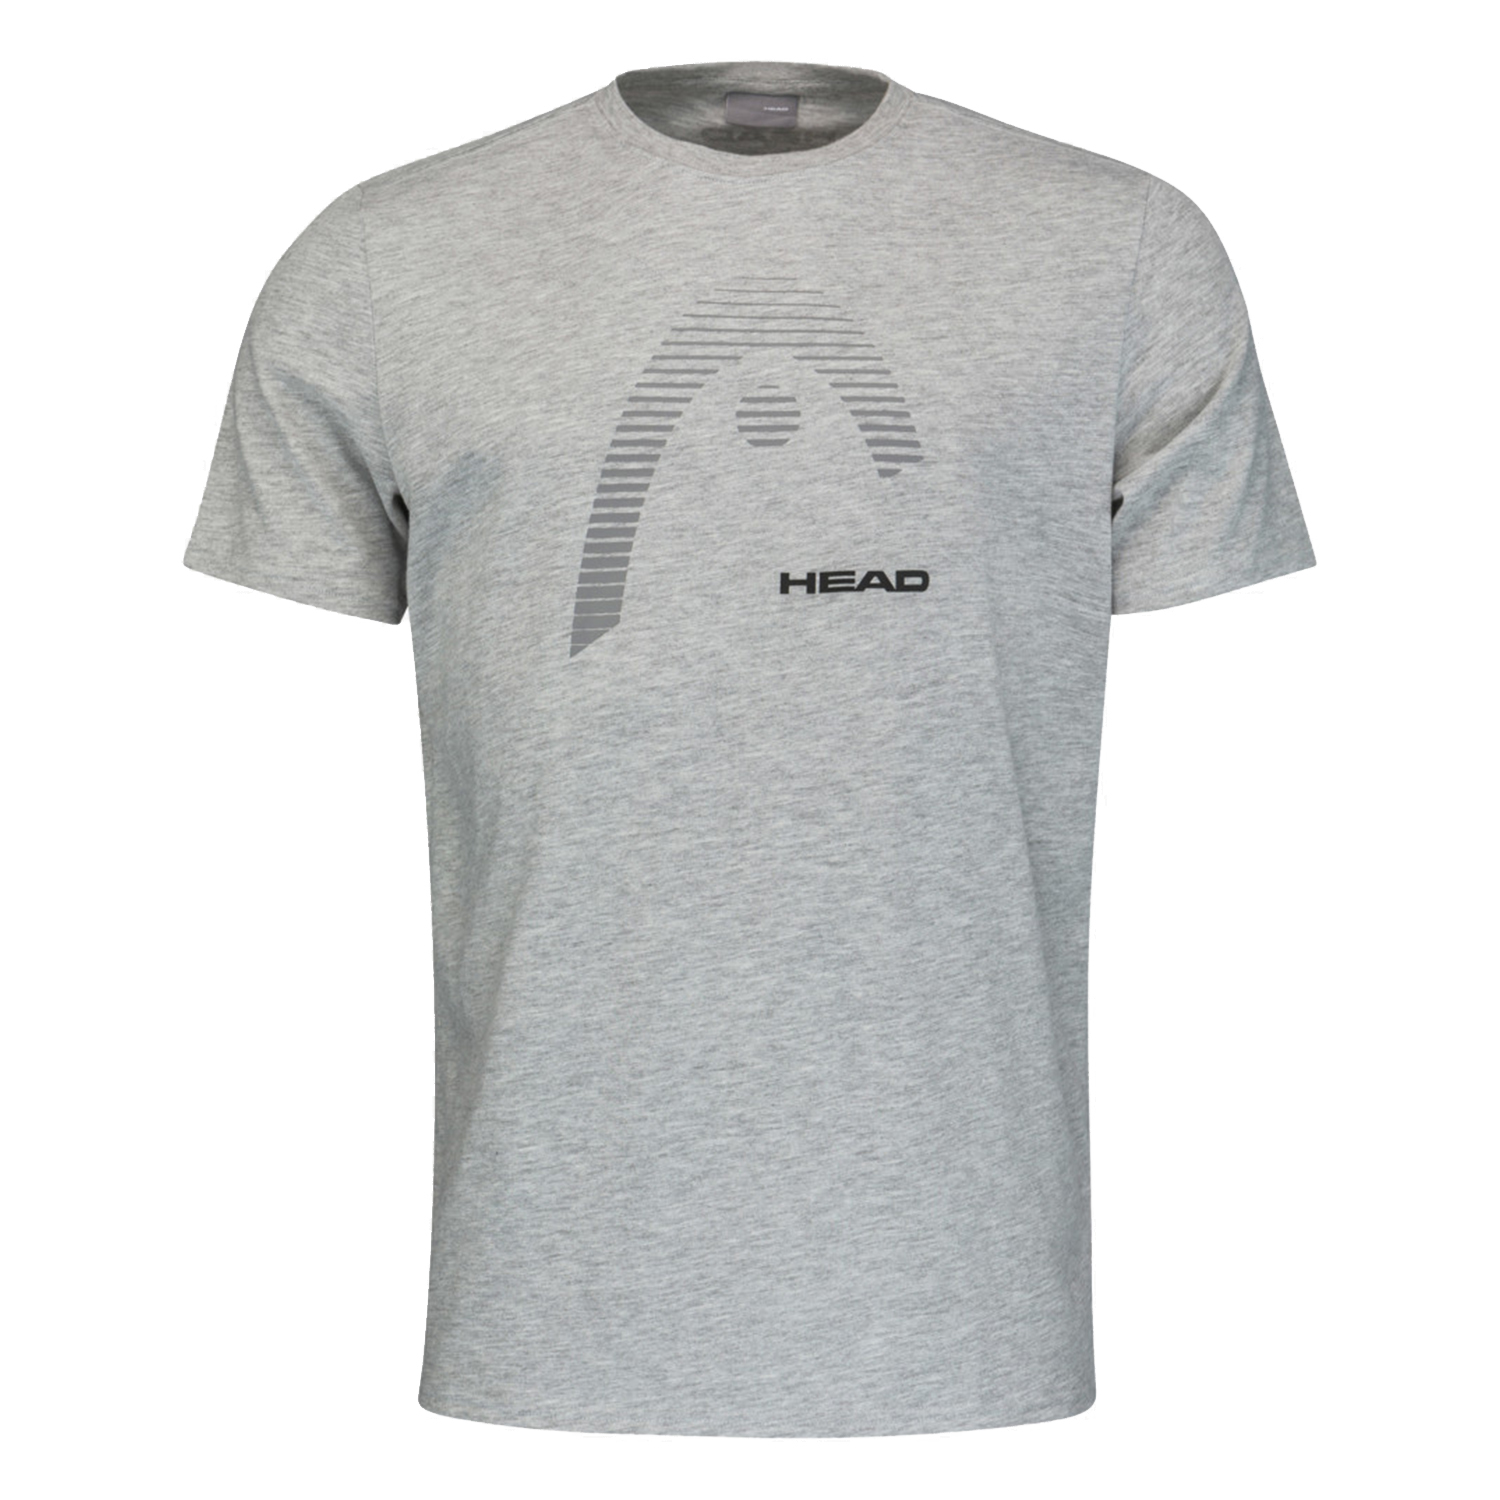 Head Club Carl Camiseta Niños - Grey Melange